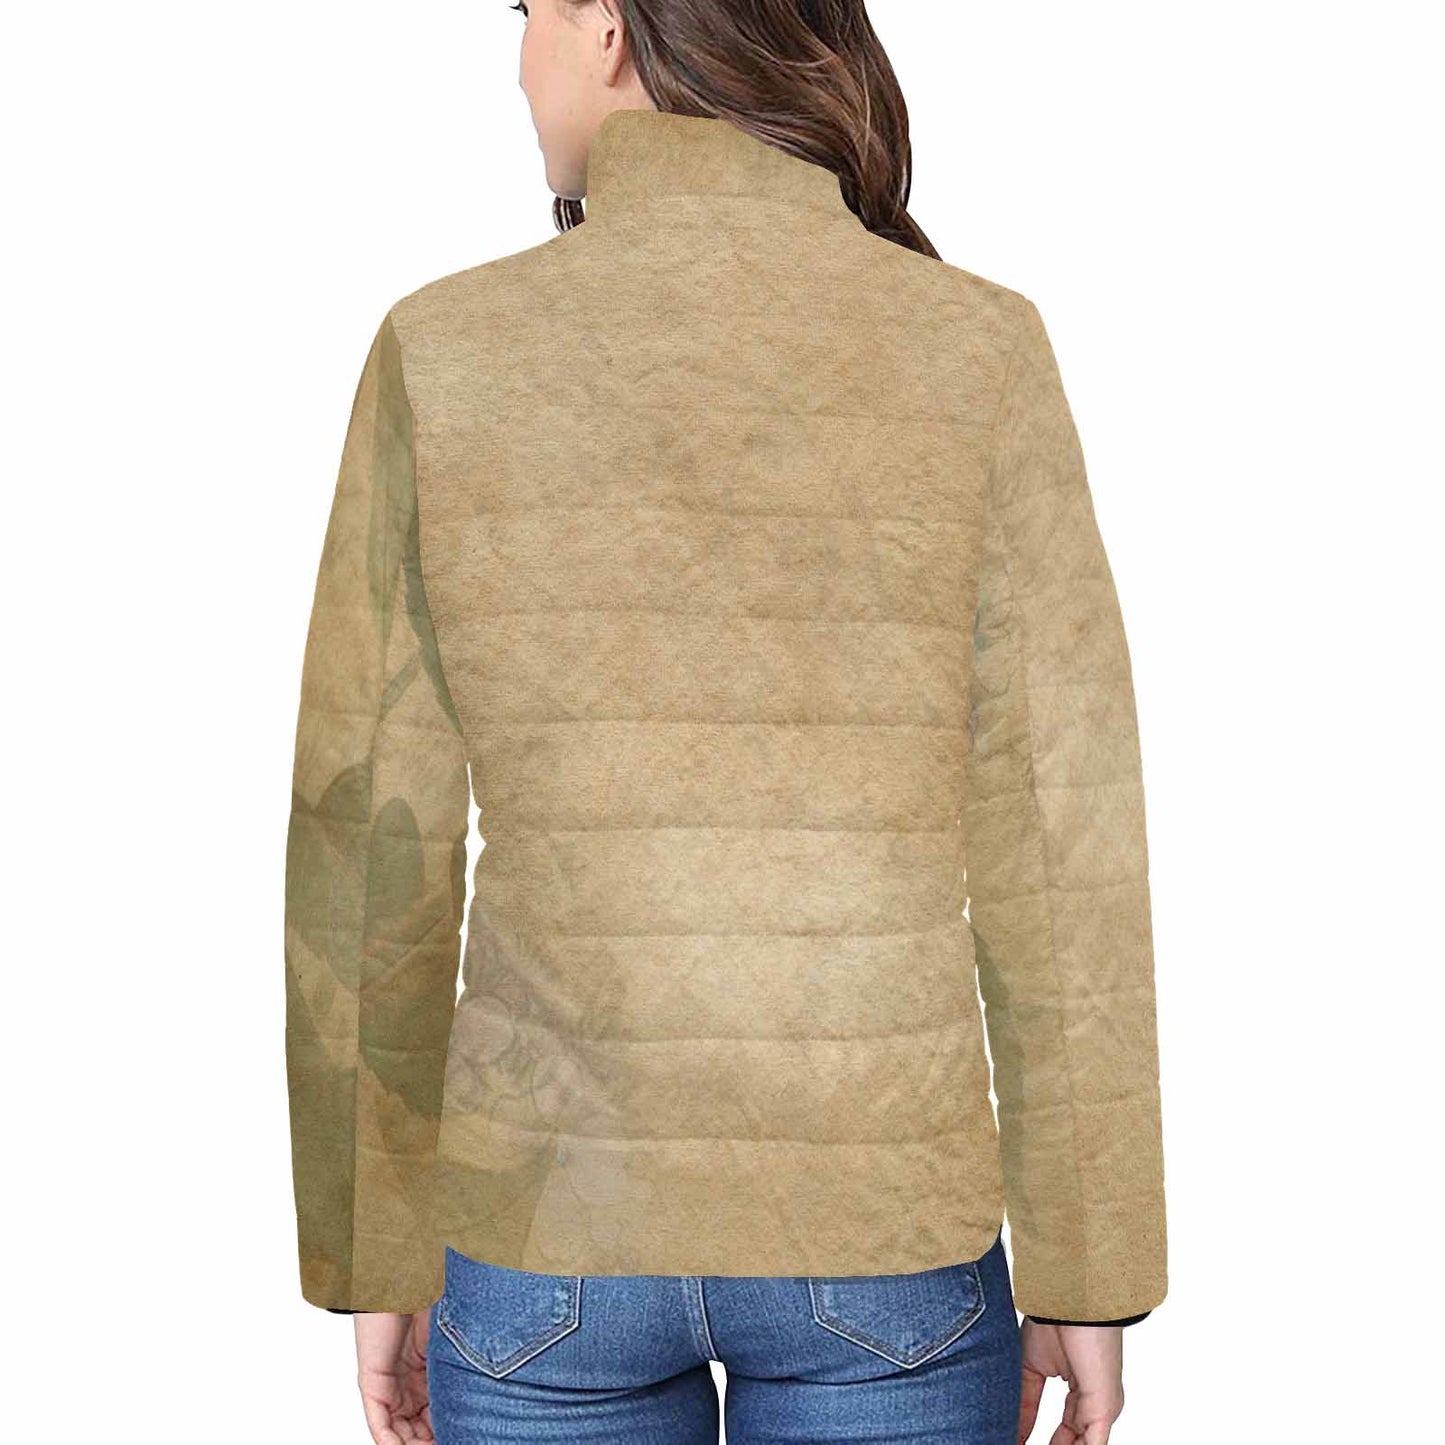 Antique general print quilted jacket, design 28